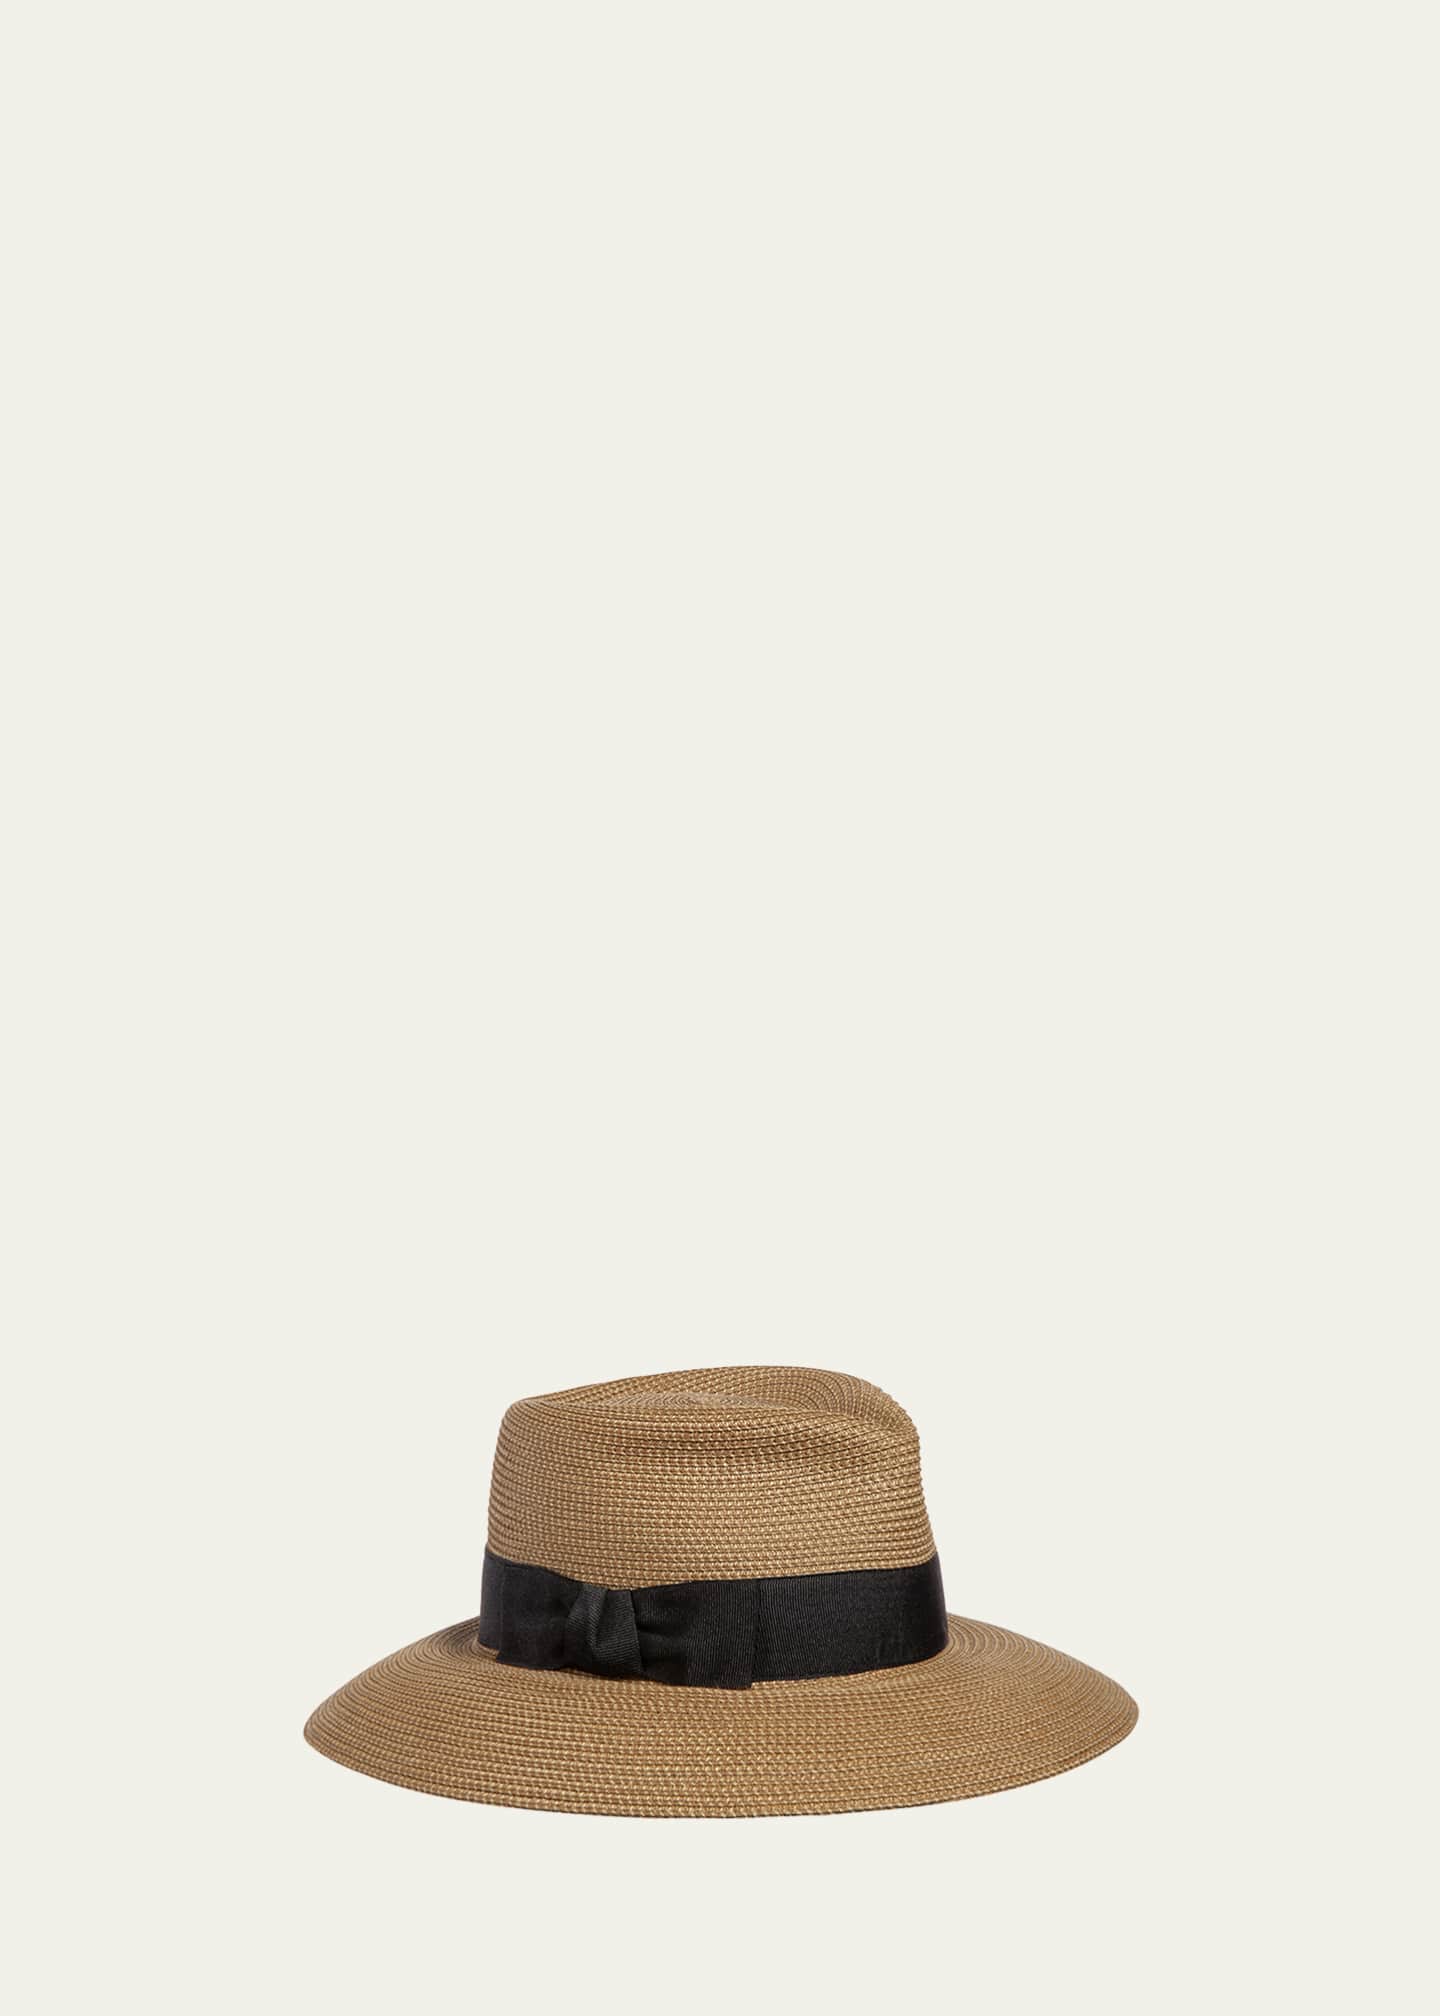 Eric Javits Phoenix Woven Boater Hat, Natural/Black